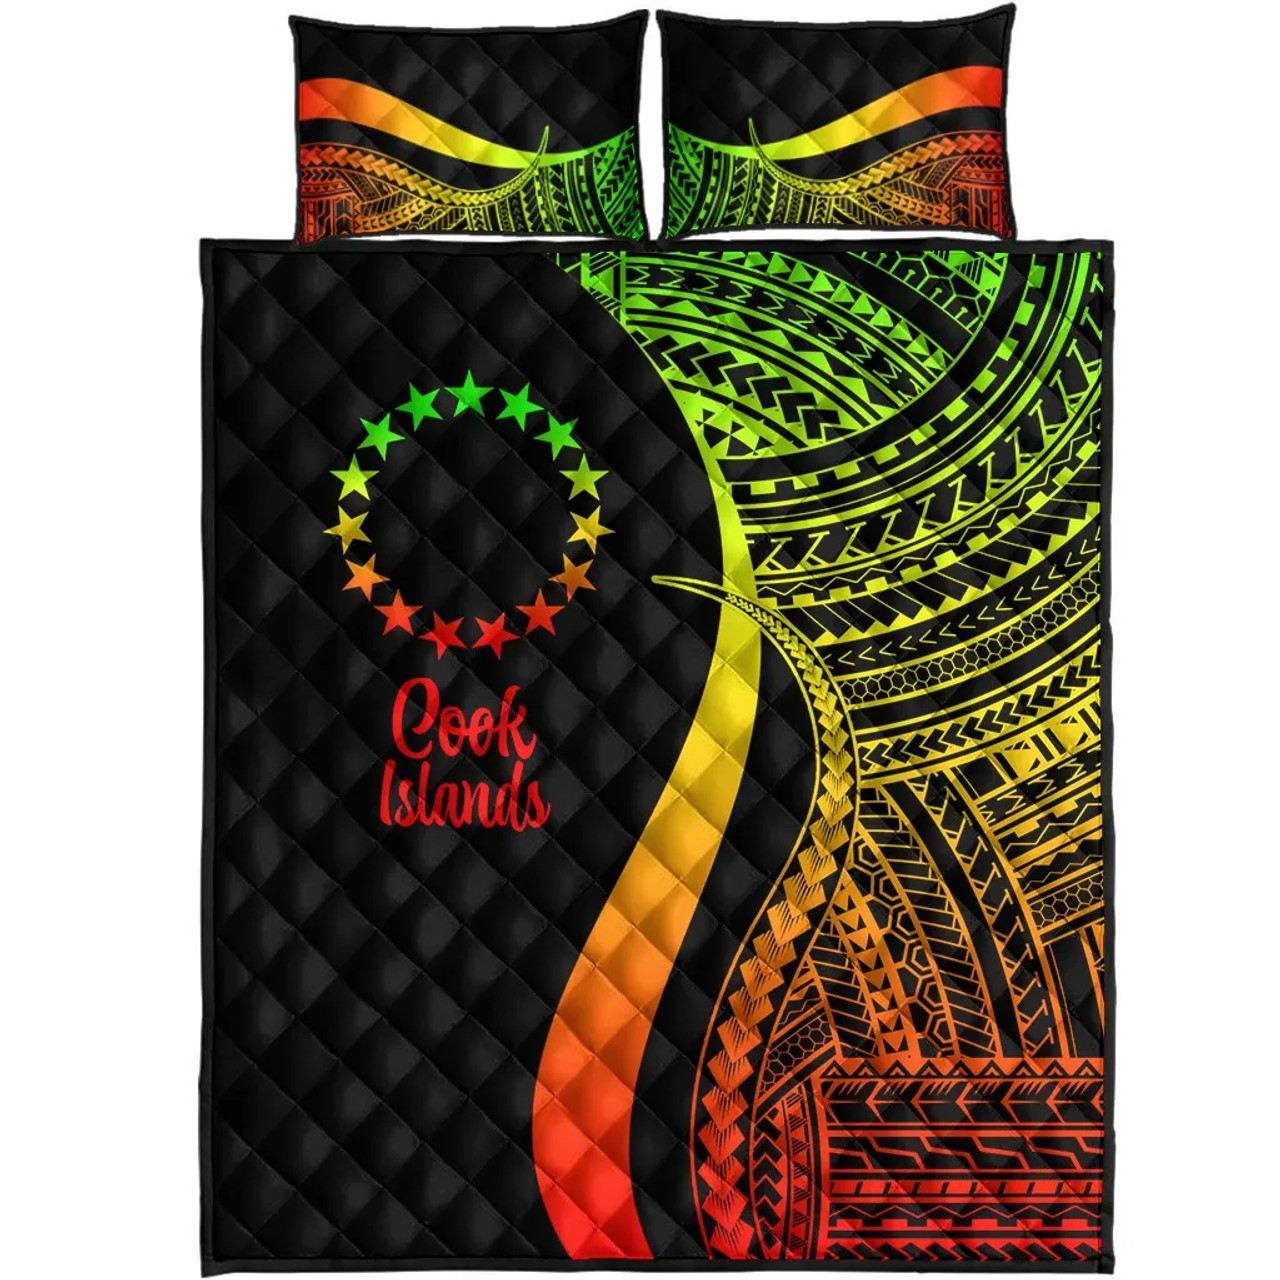 Cook Islands Quilt Bet Set - Reggae Polynesian Tentacle Tribal Pattern 5